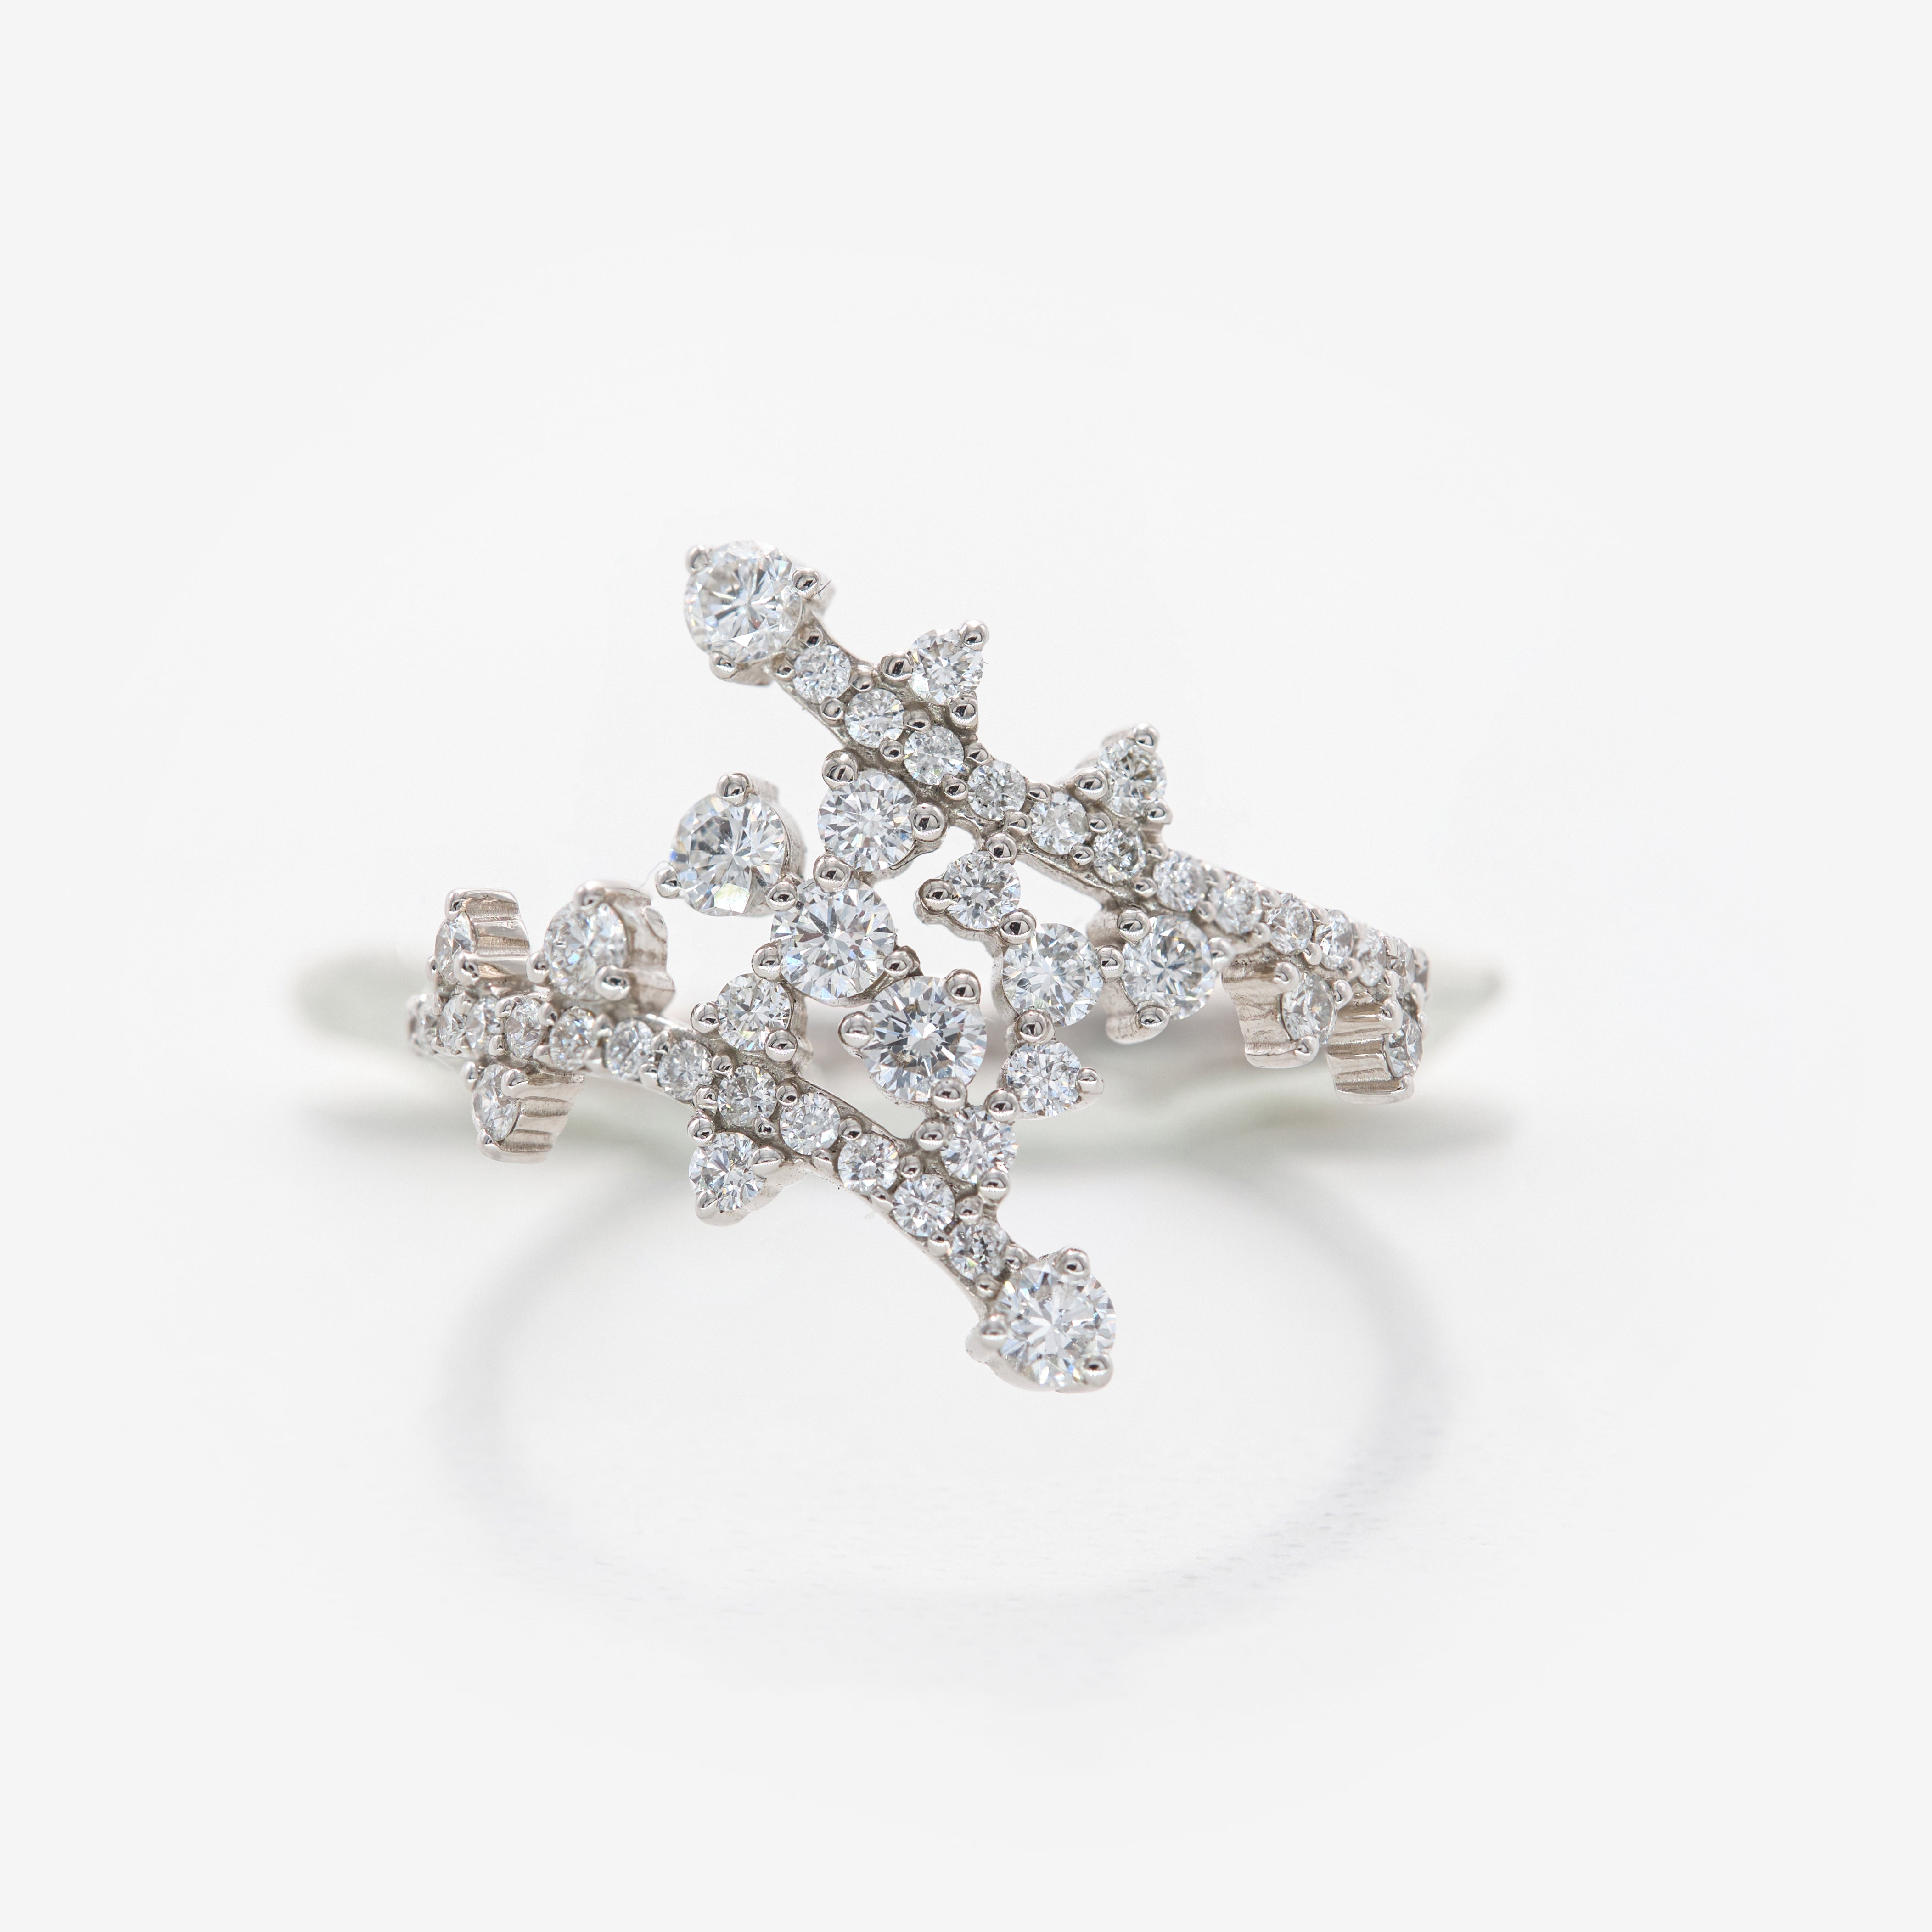 Artemis ring with diamonds !! -35%!!